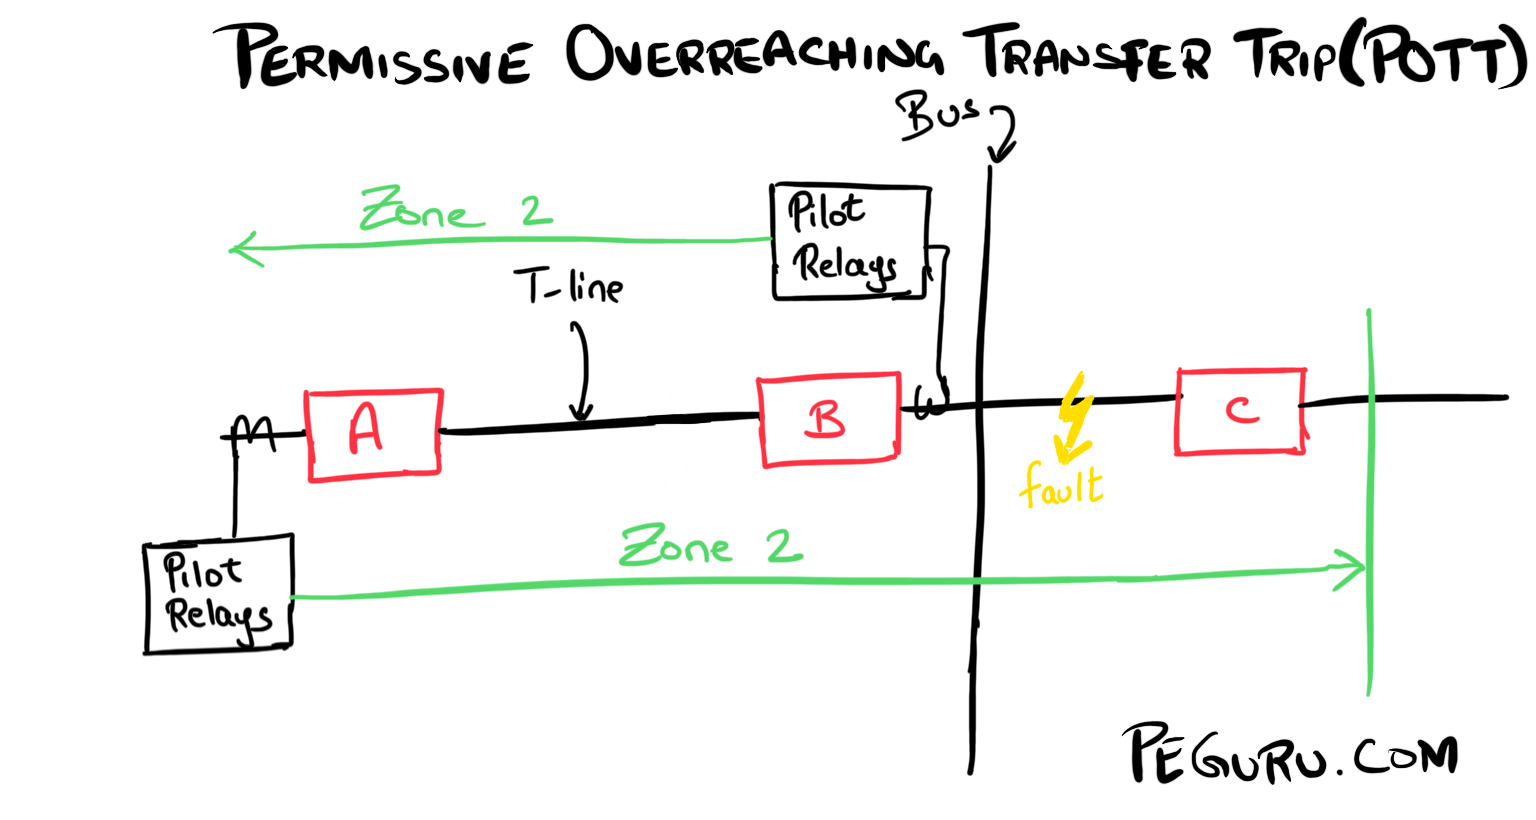 Permissive Overreaching Transfer Trip (POTT) Scheme: Scenario 2 - Fault outside the zone of protection.